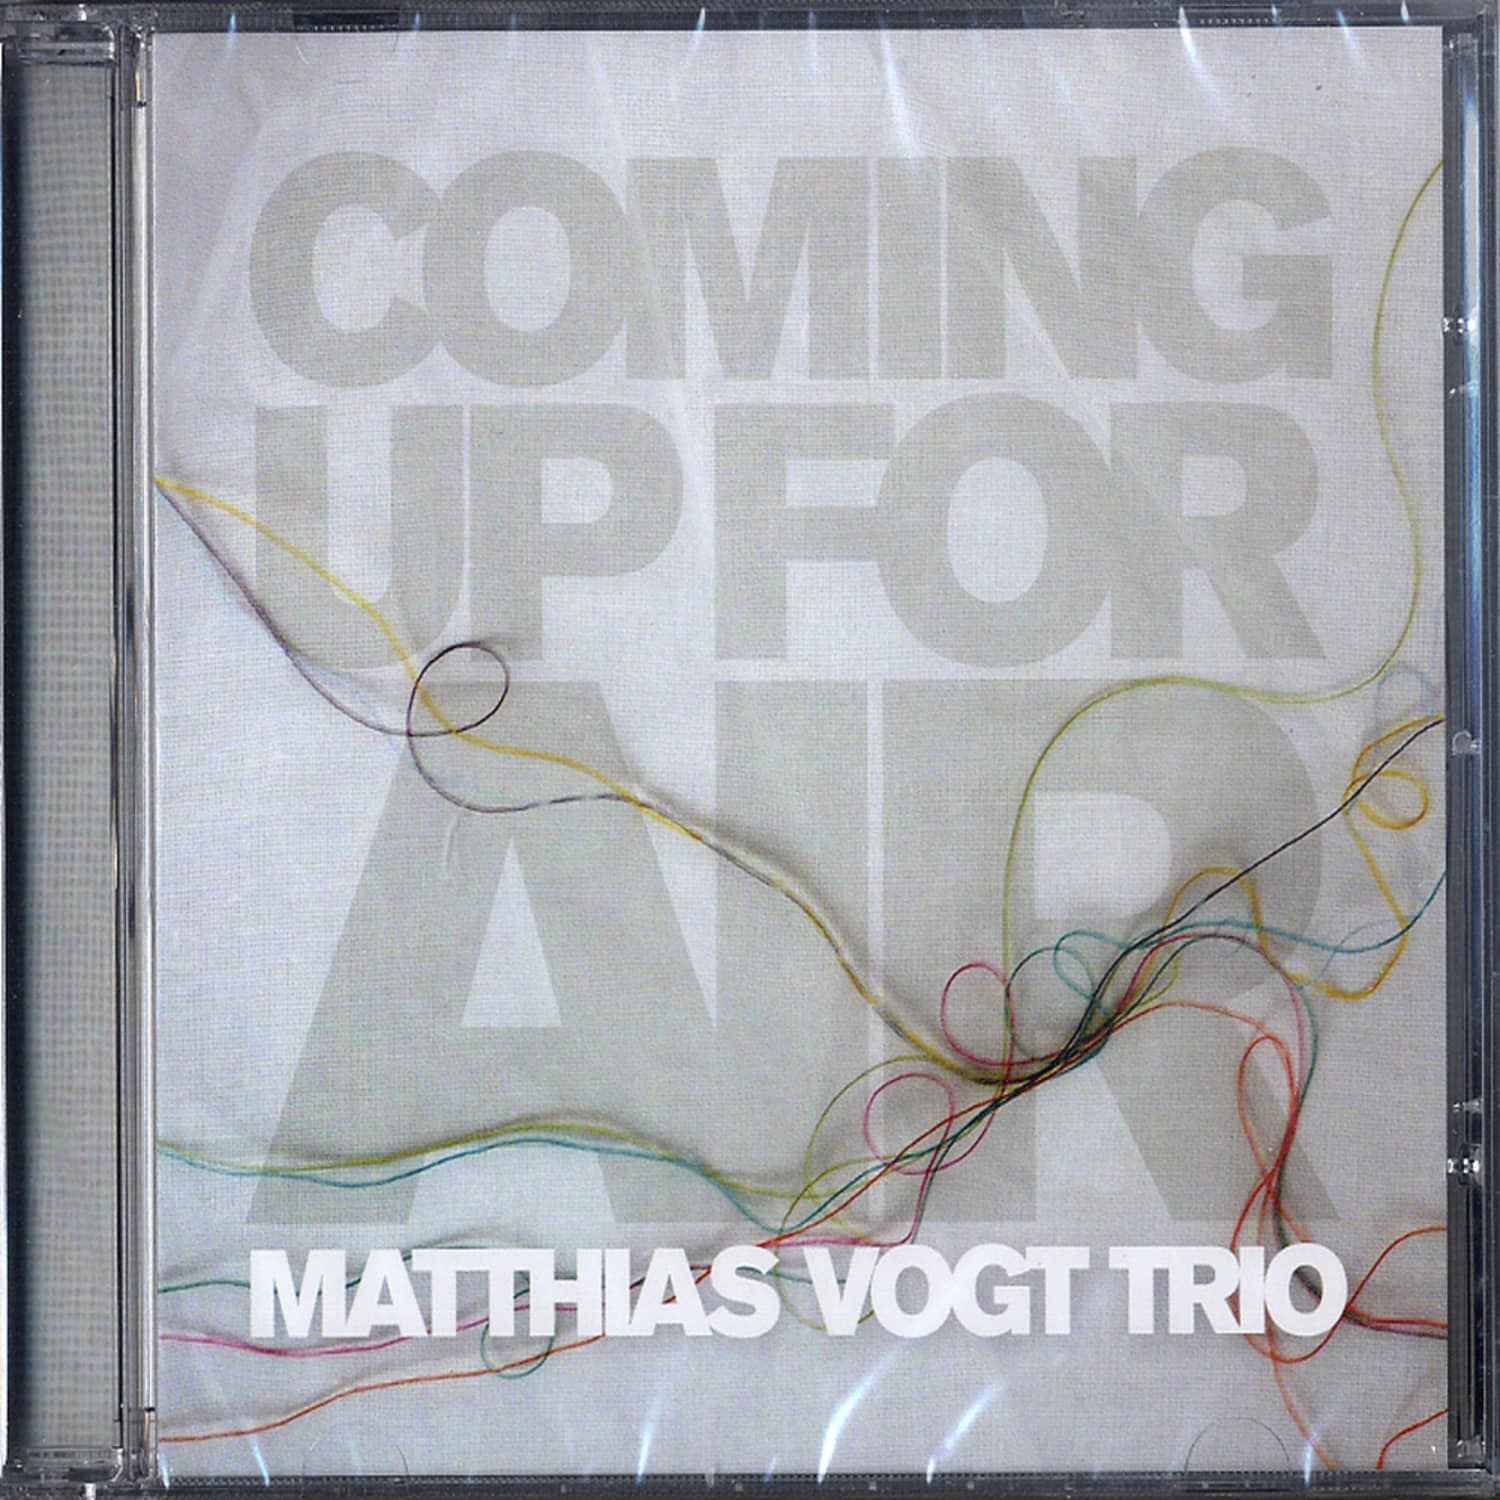 Matthias Vogt Trio - COMING UP FOR AIR 